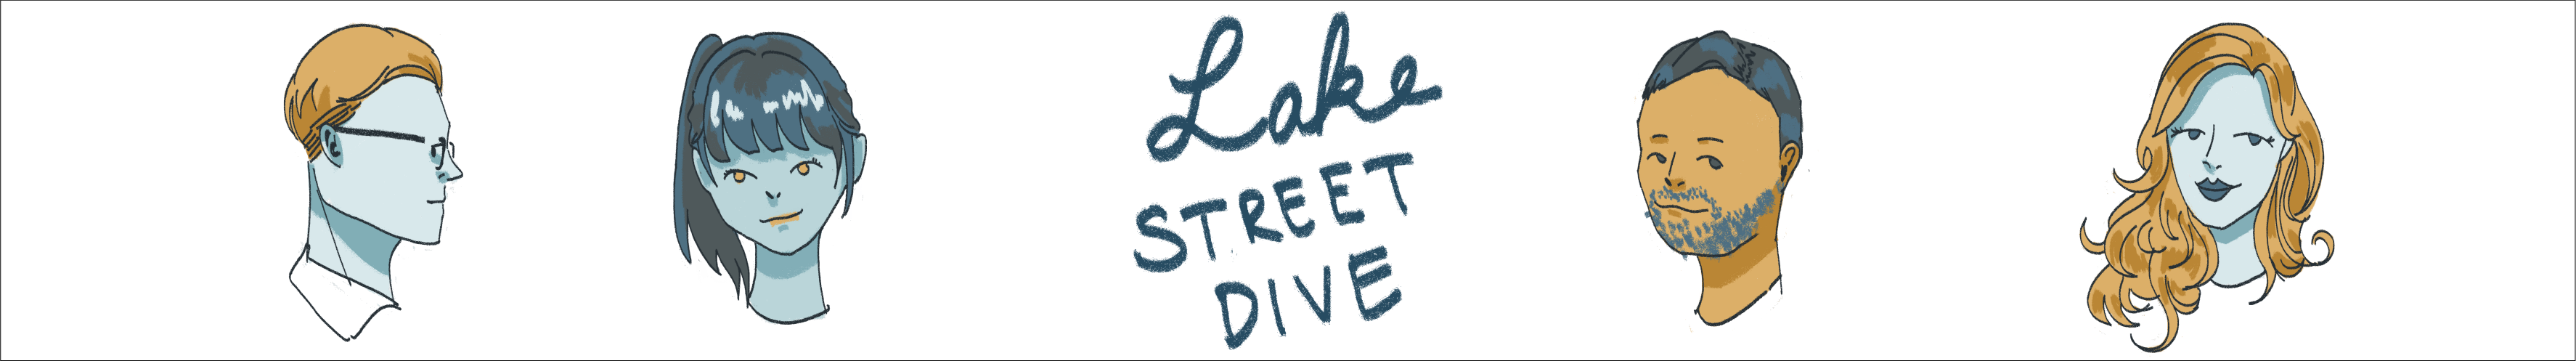 Lake Street Dive Illustration by Nicole Bae
